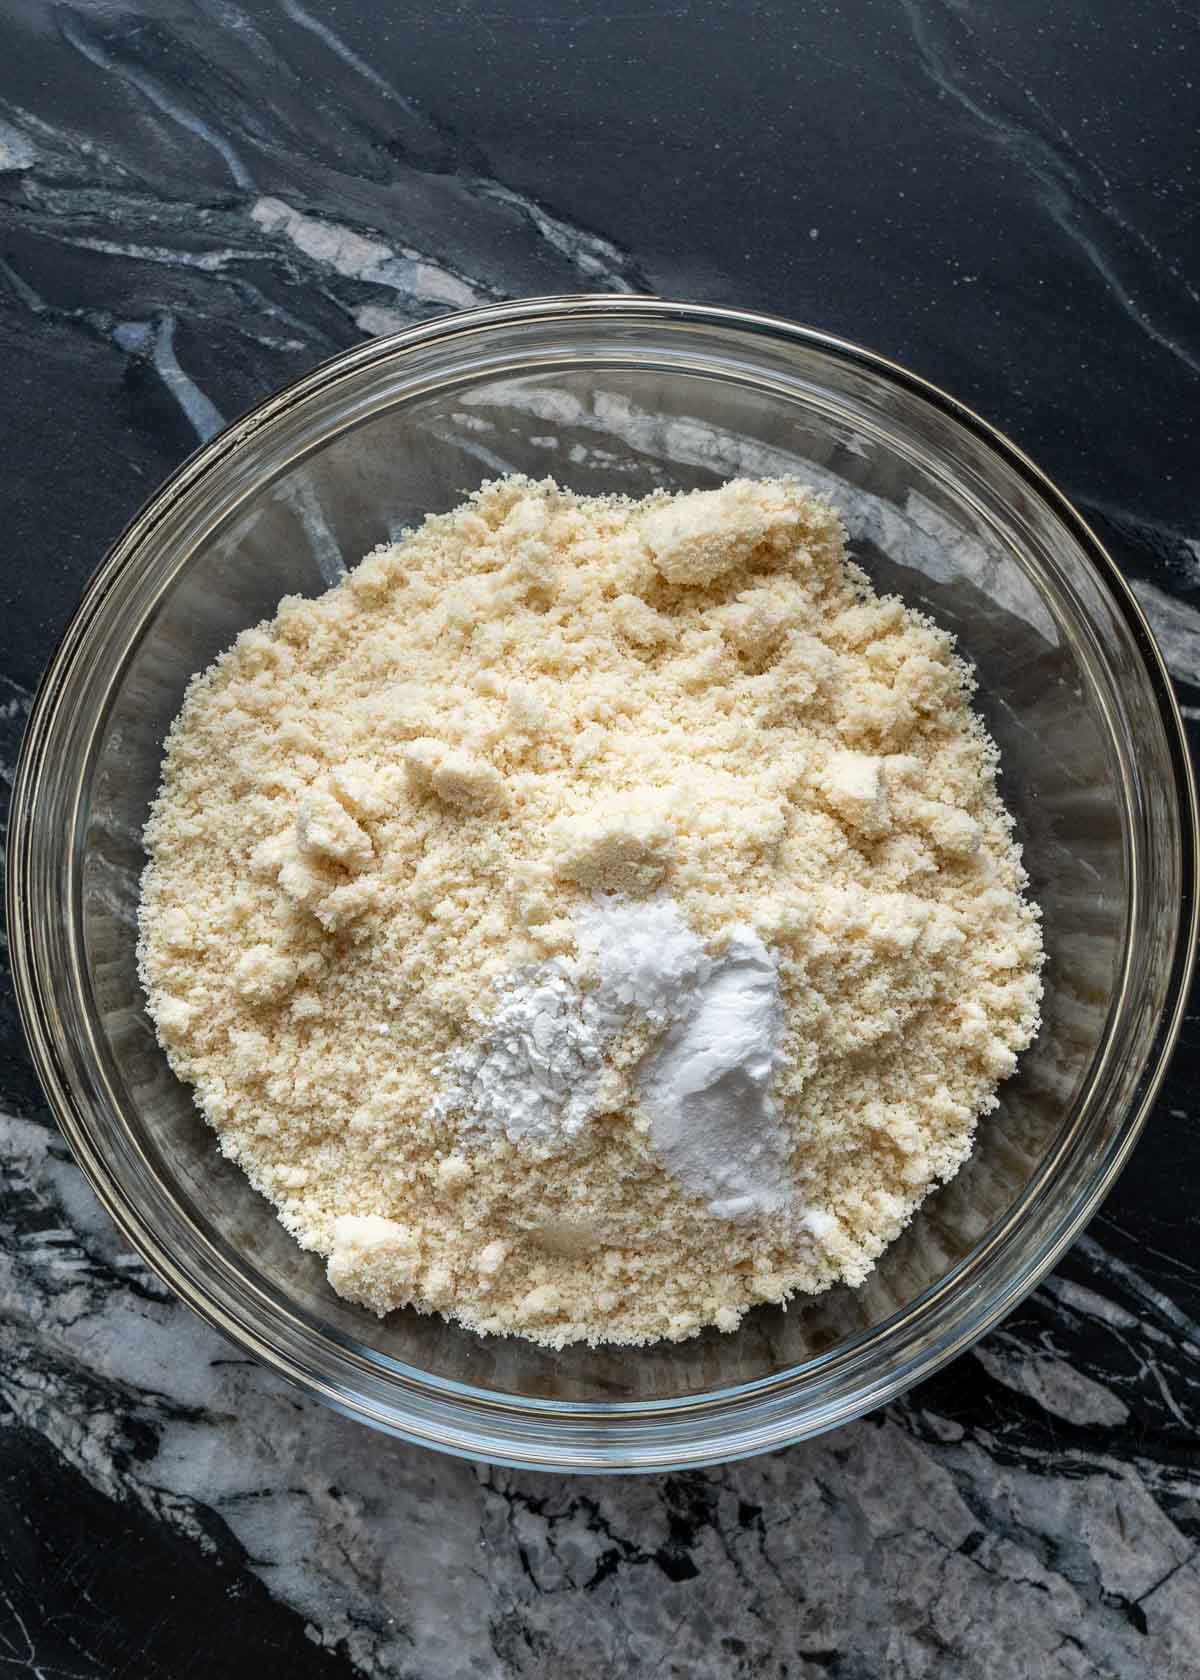 almond flour, baking soda, baking powder, and salt in a glass bowl